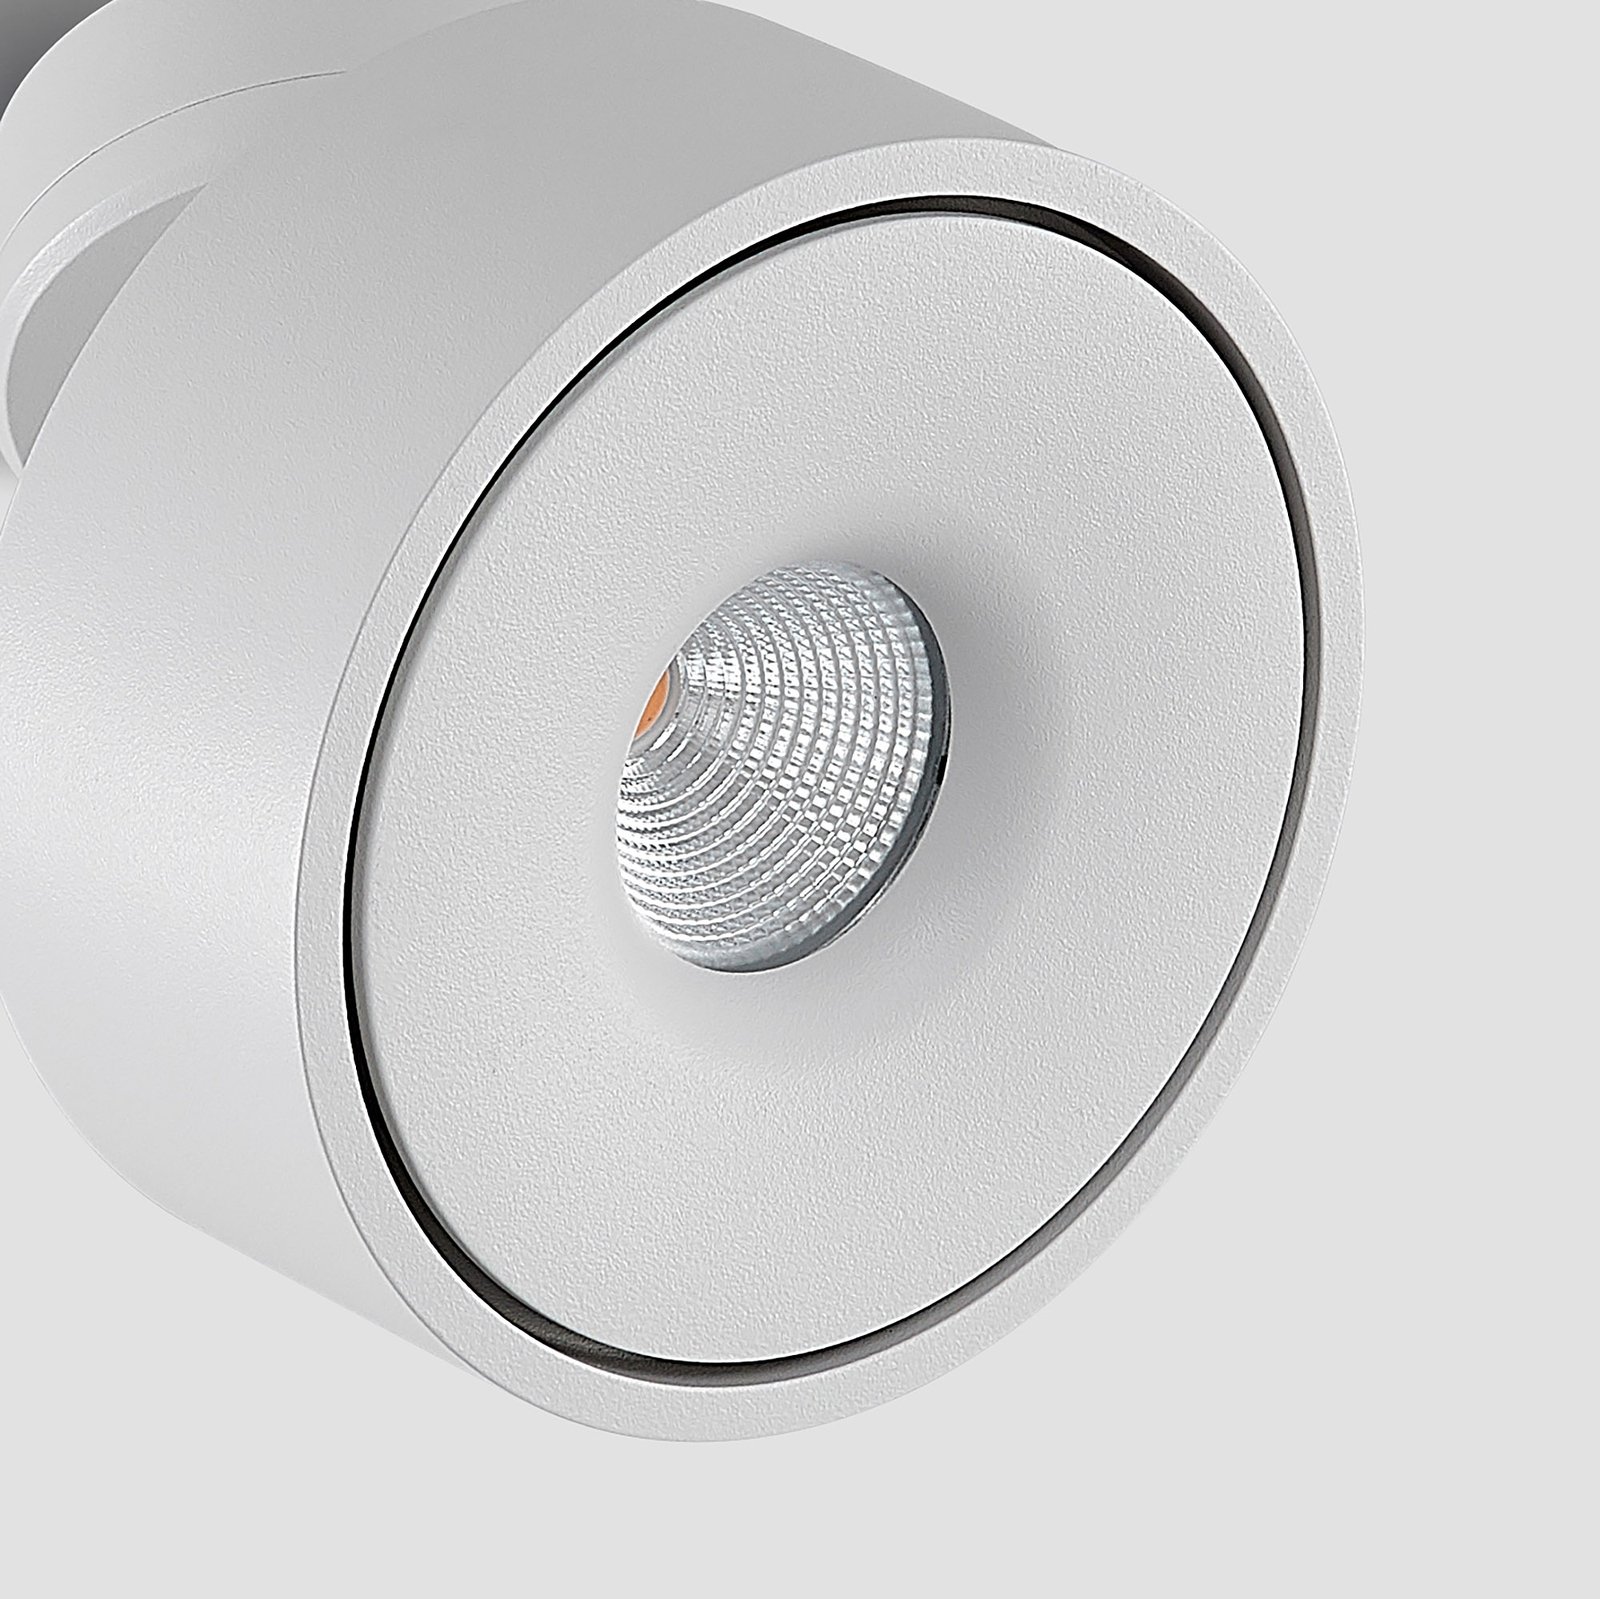 Arcchio Rotari plafonnier LED, blanc, inclinable